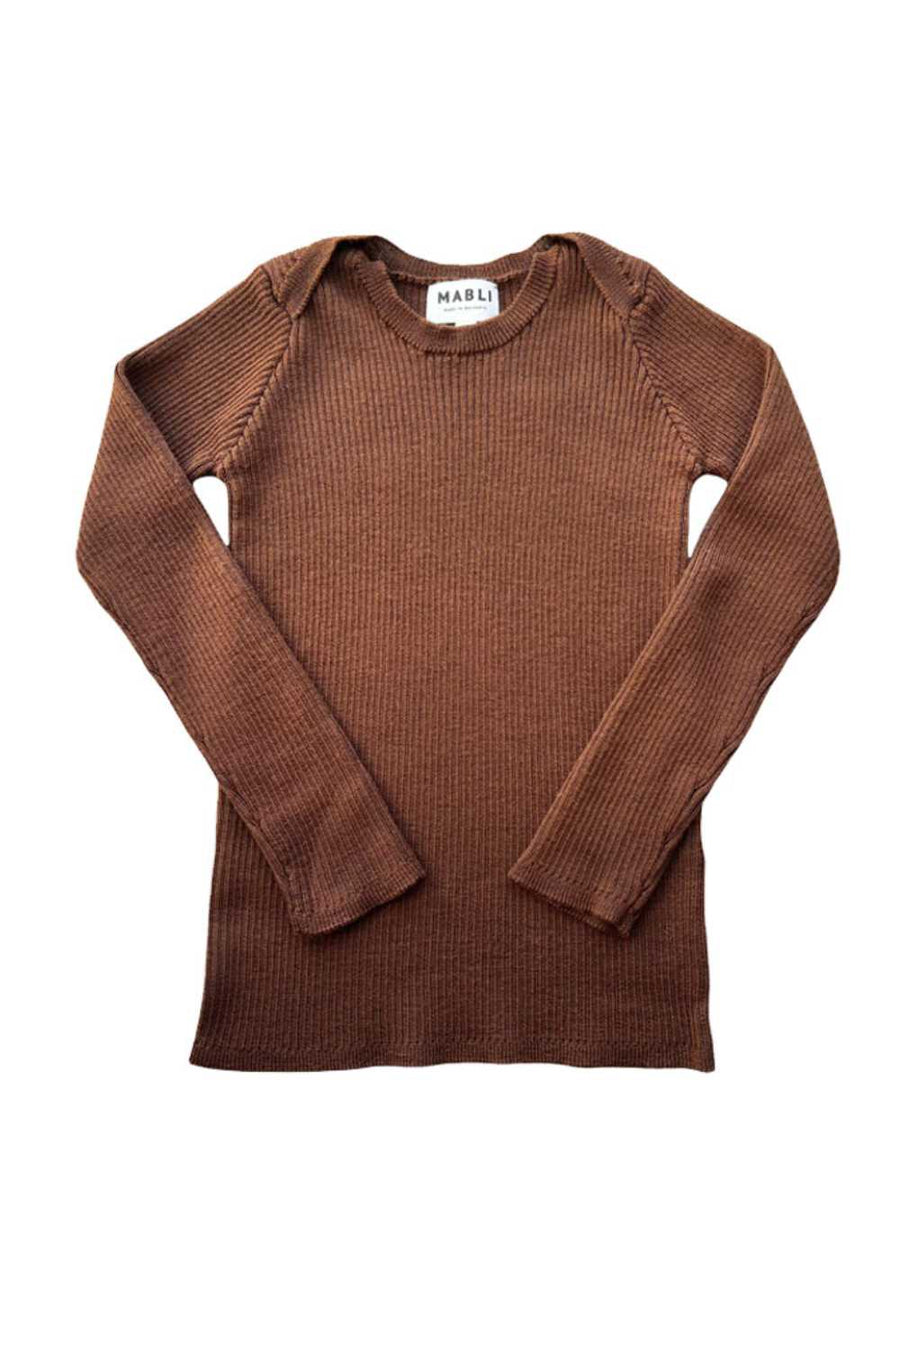 Sylfaen brown sweater by Mabli